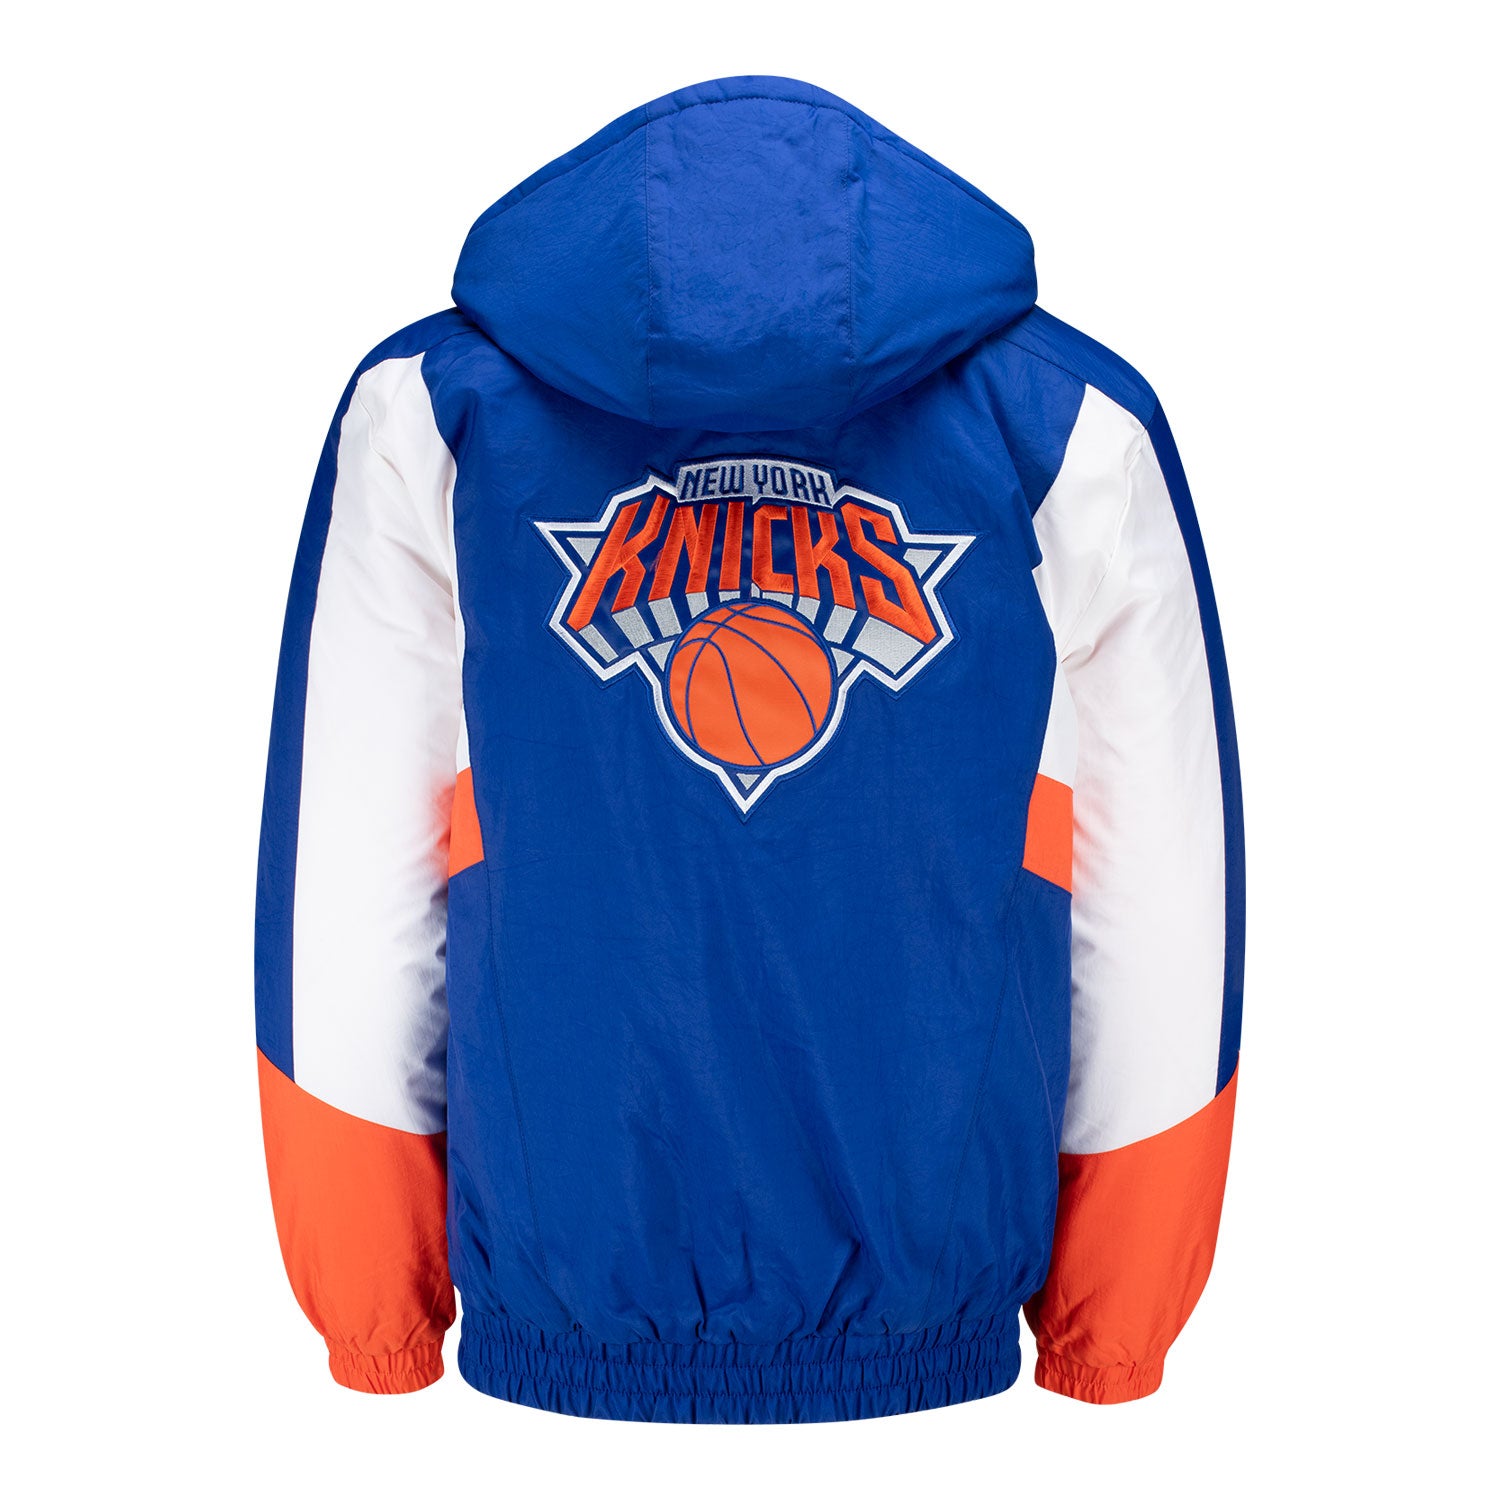 Starter Knicks Full Back Polyfill Jacket - Back View